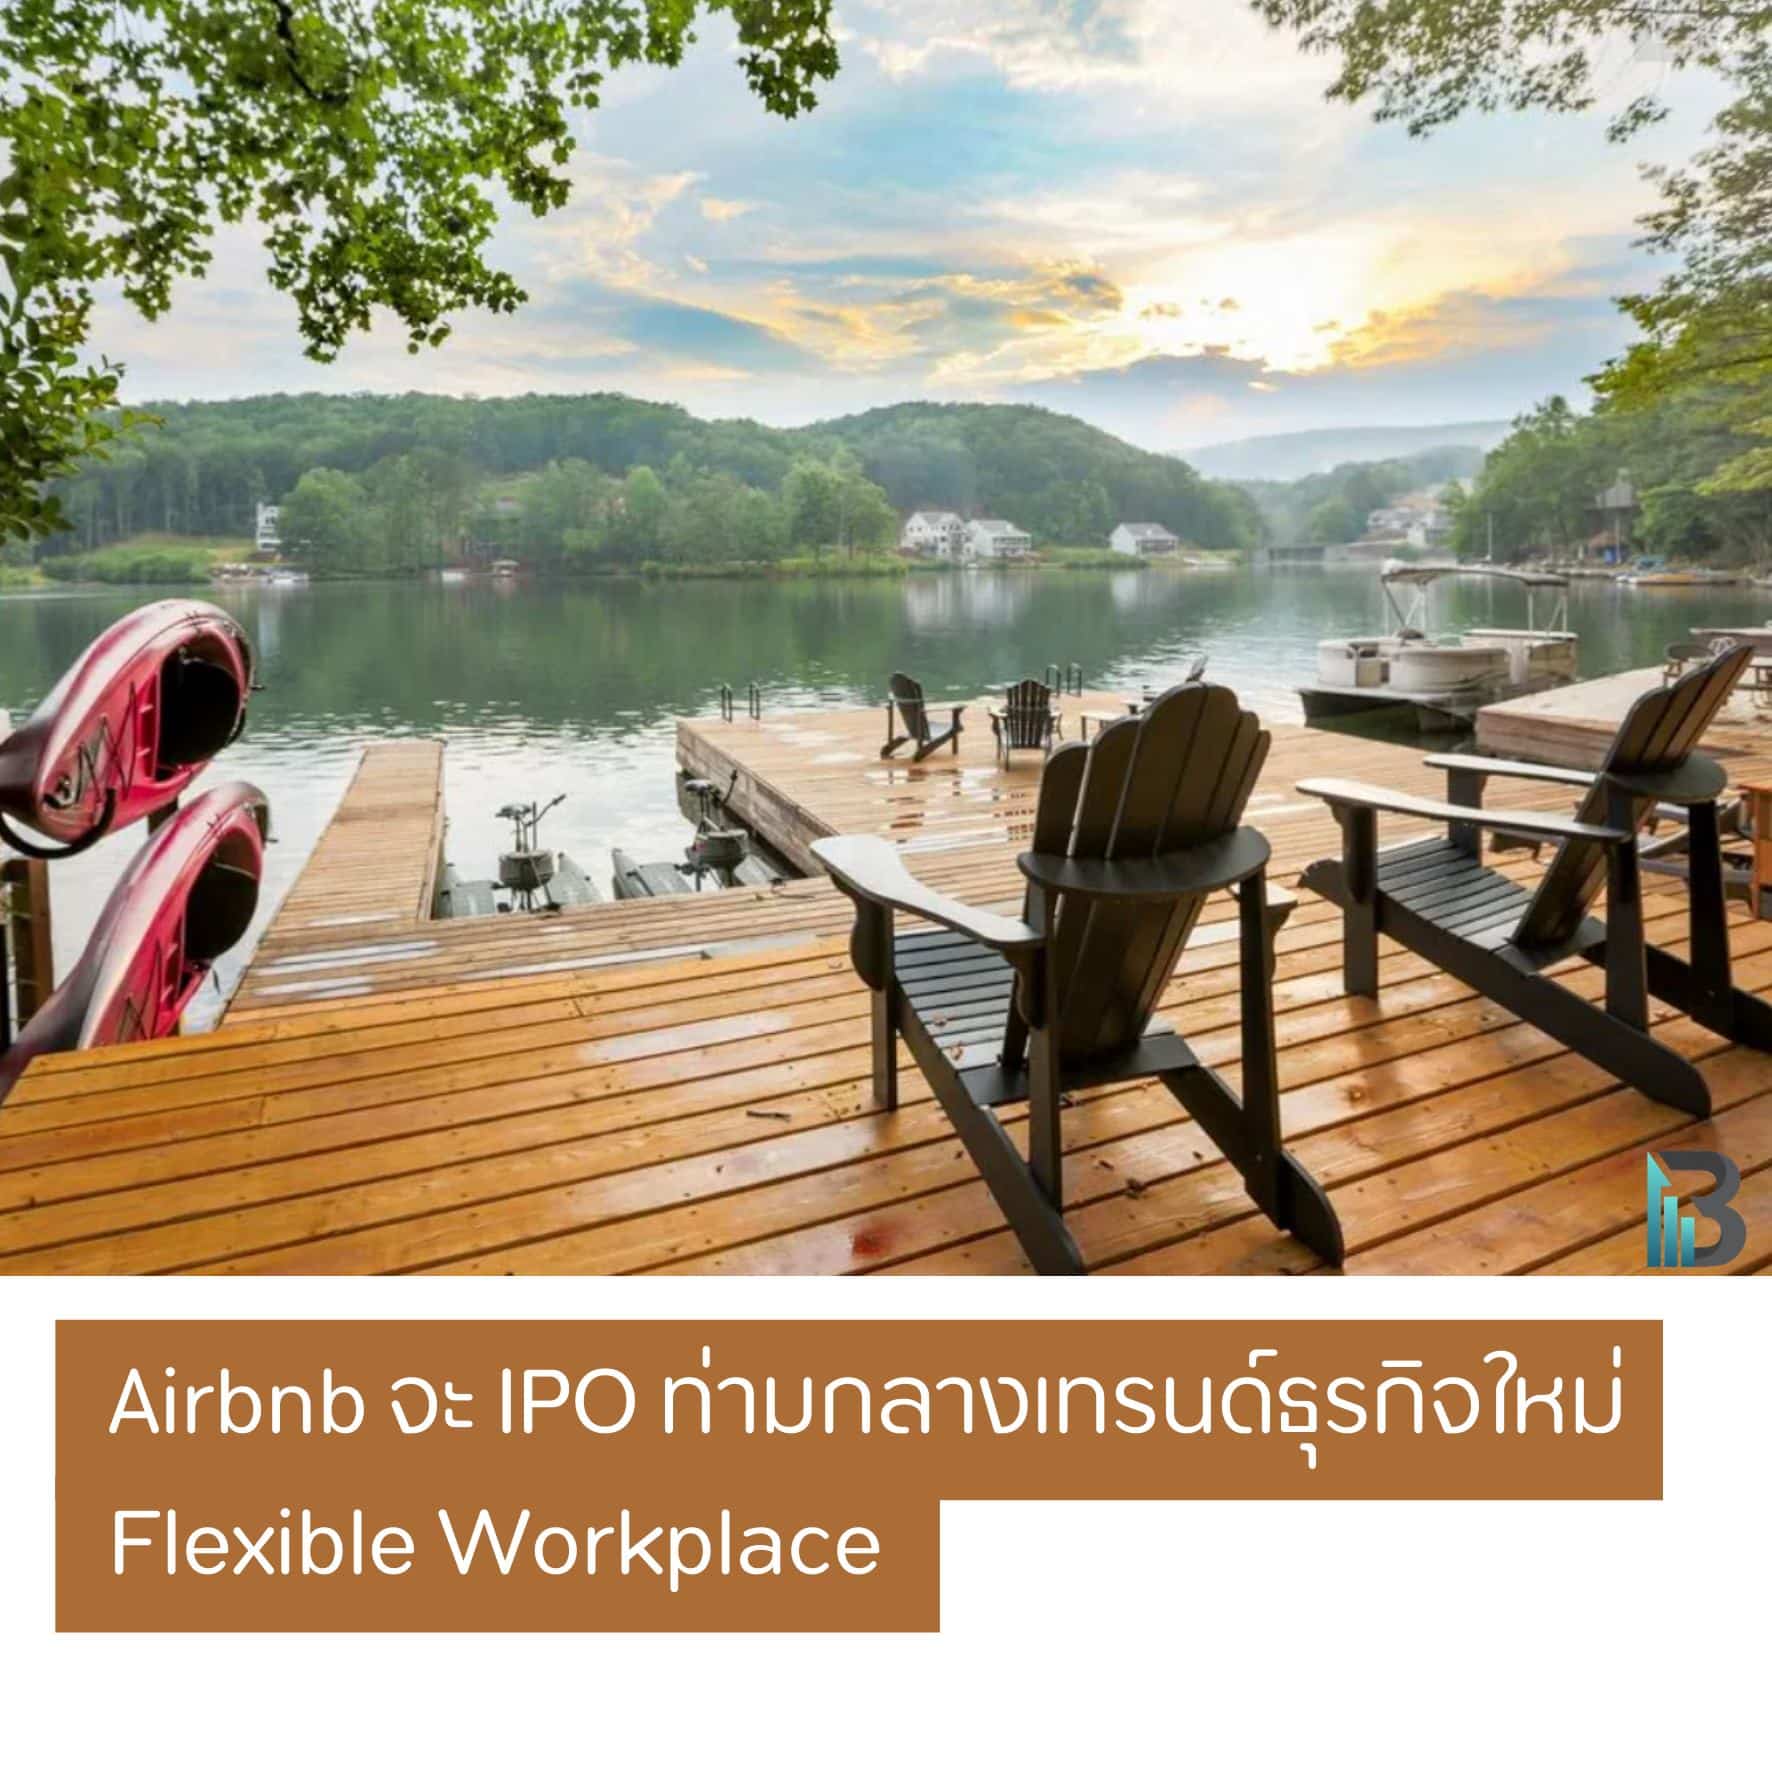 Airbnb จะ IPO ท่ามกลางเทรนด์ธุรกิจใหม่ Flexible Workplace